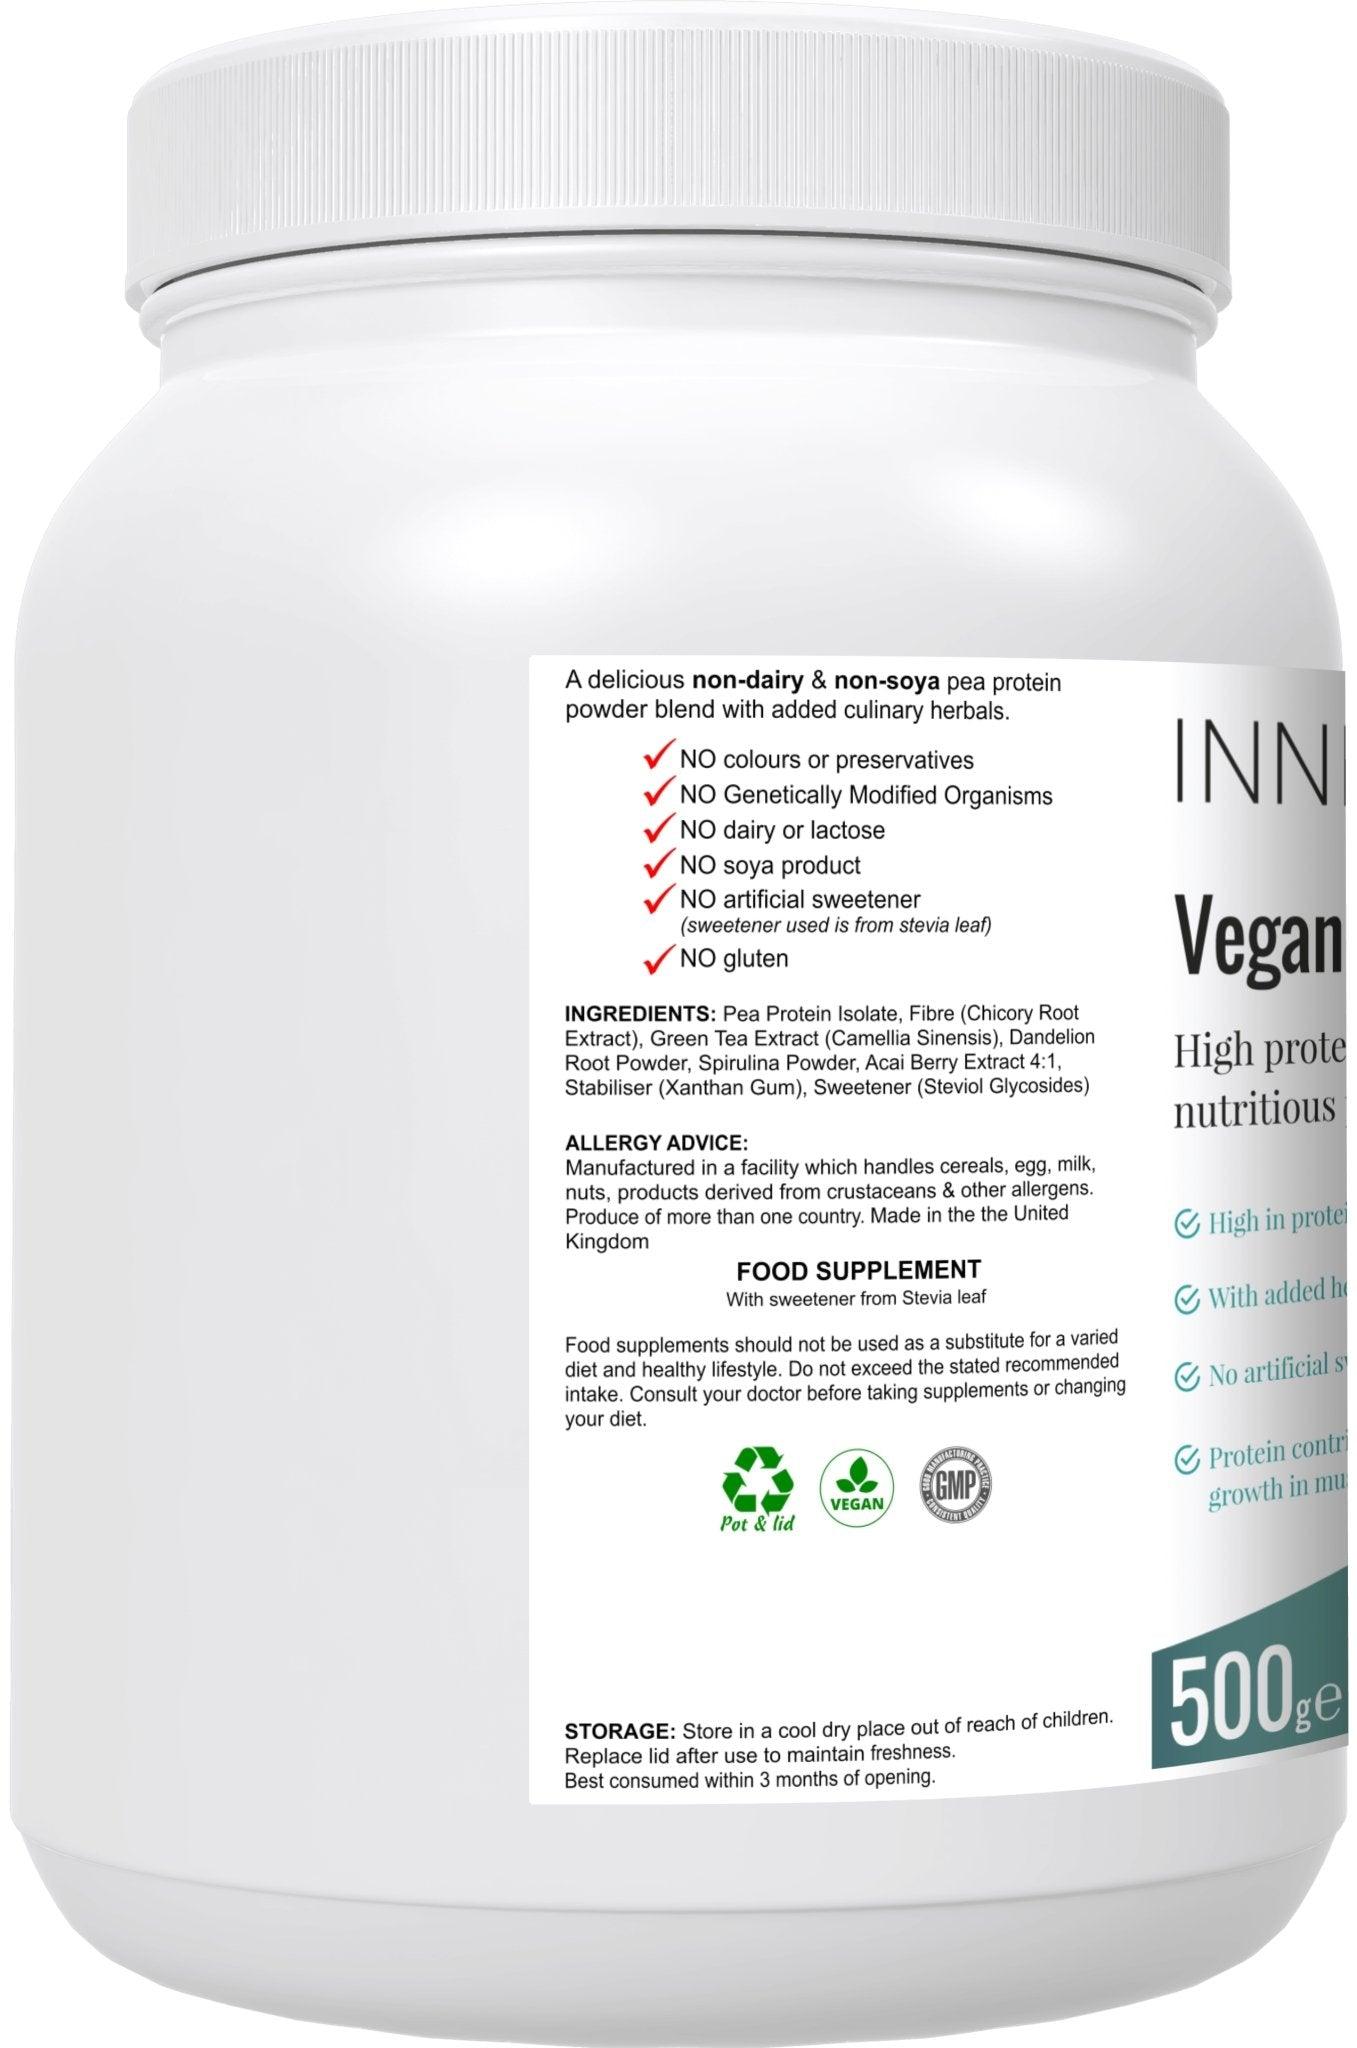 Vegan Pea Protein - 500g - Inner Health Clinic